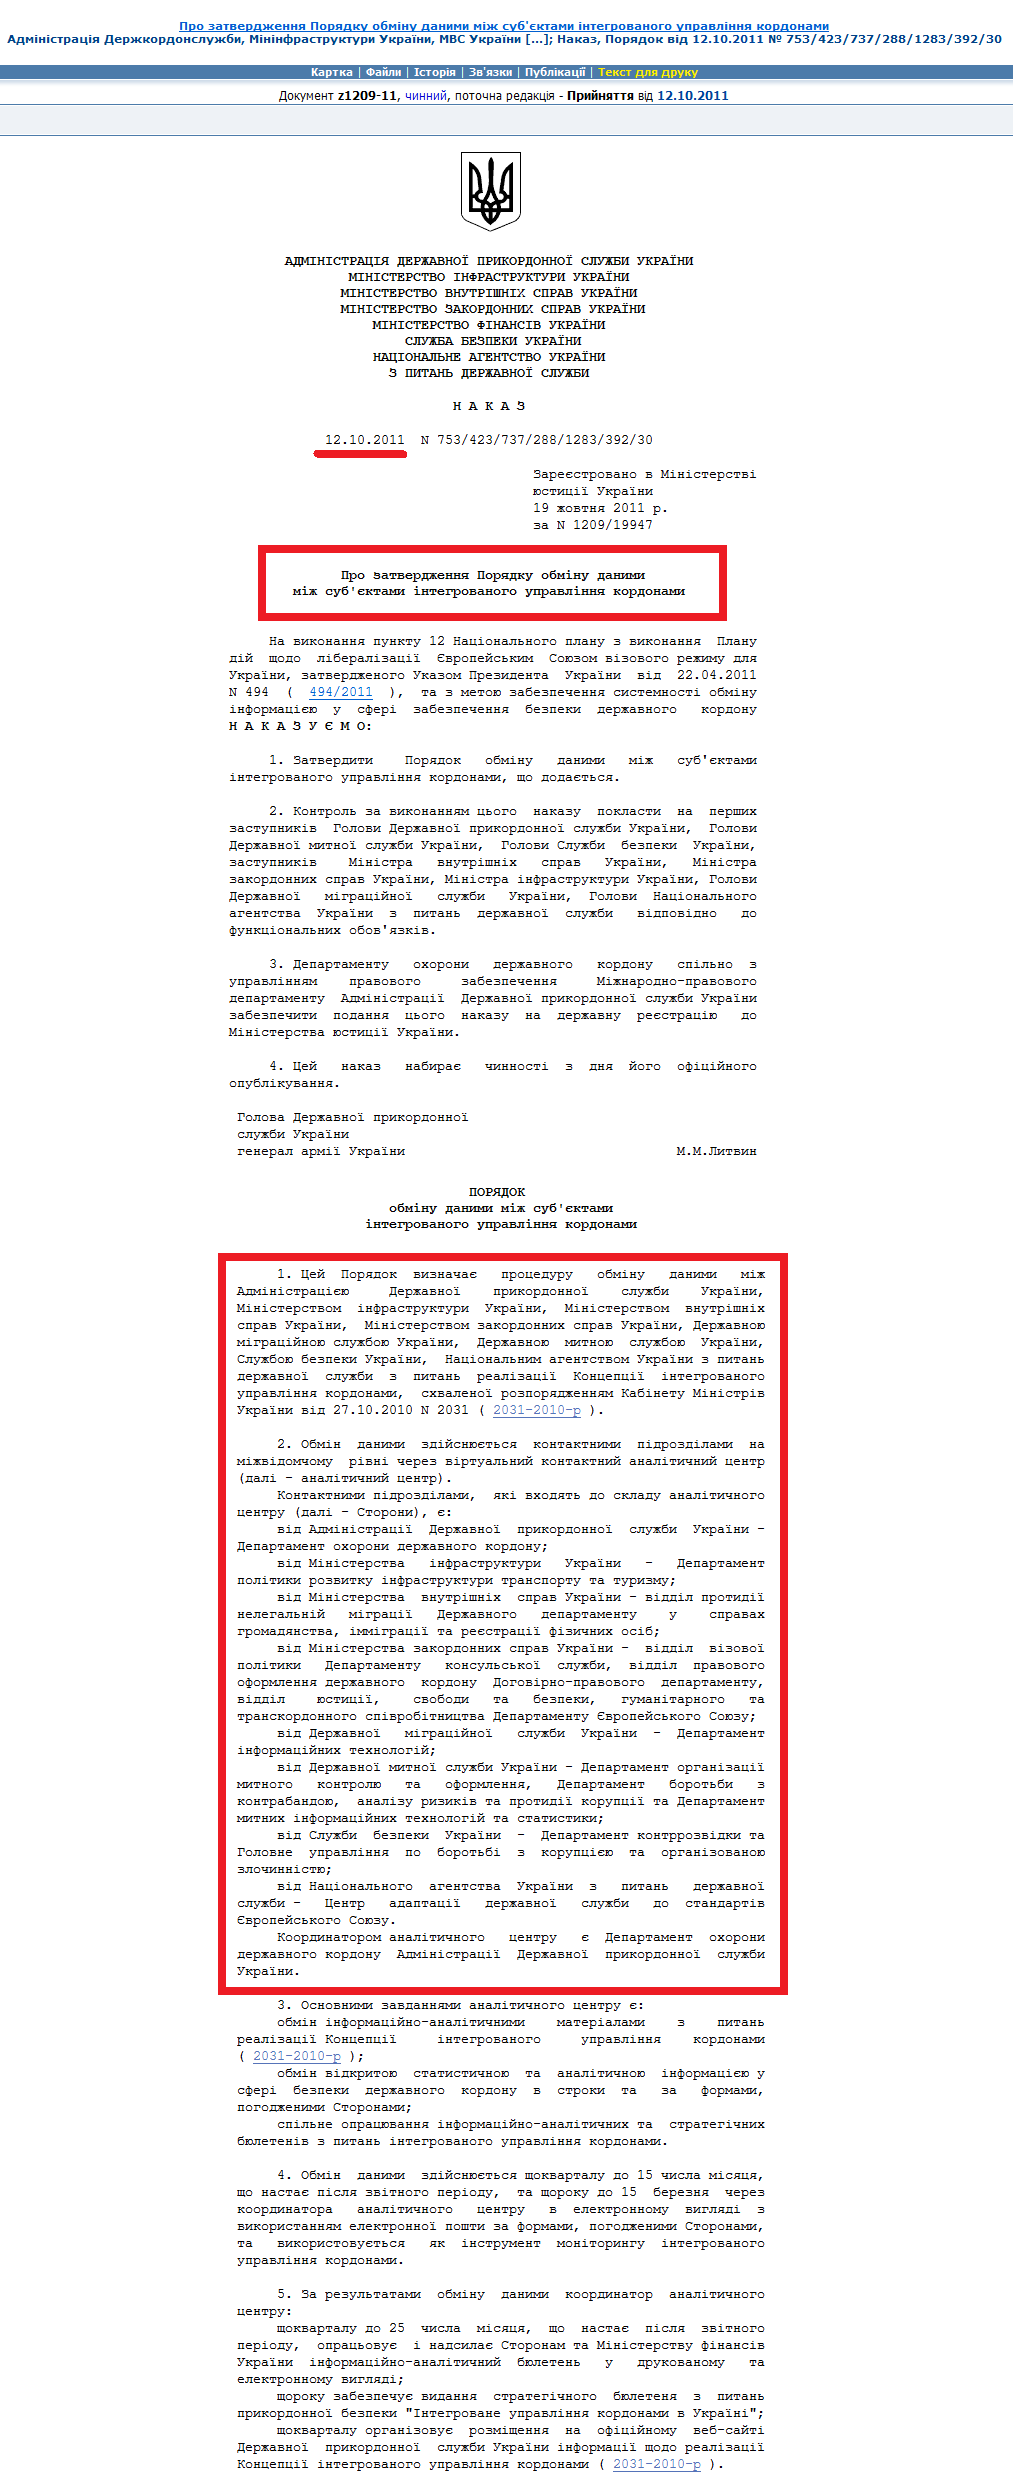 http://zakon2.rada.gov.ua/laws/show/z1209-11